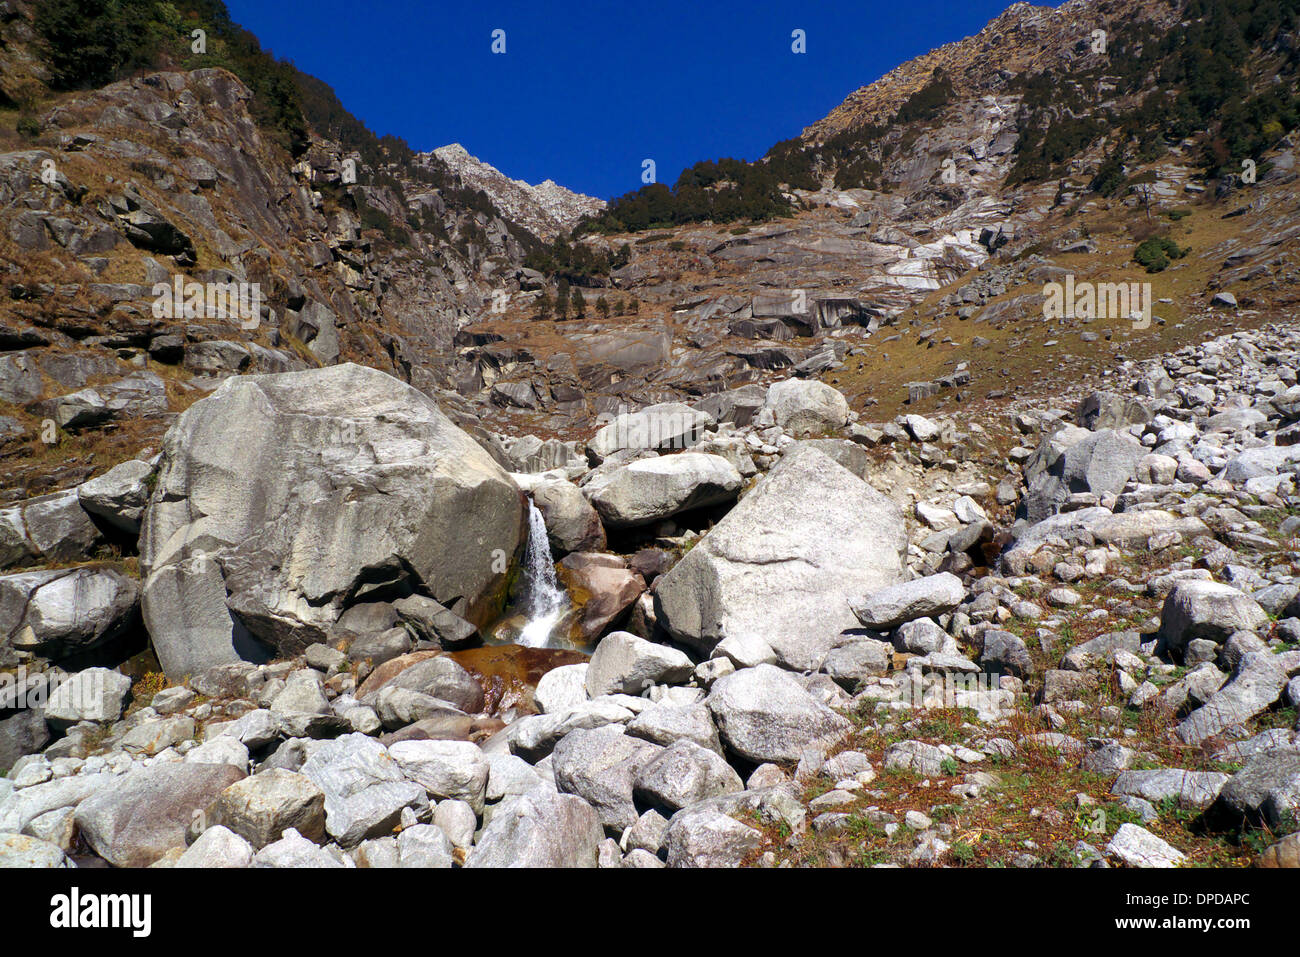 Stream by pilgrimage route, Bhaga in Dhauladhar mountains,nr Mcleodganj, Himachal Pradesh, N. India. Stock Photo